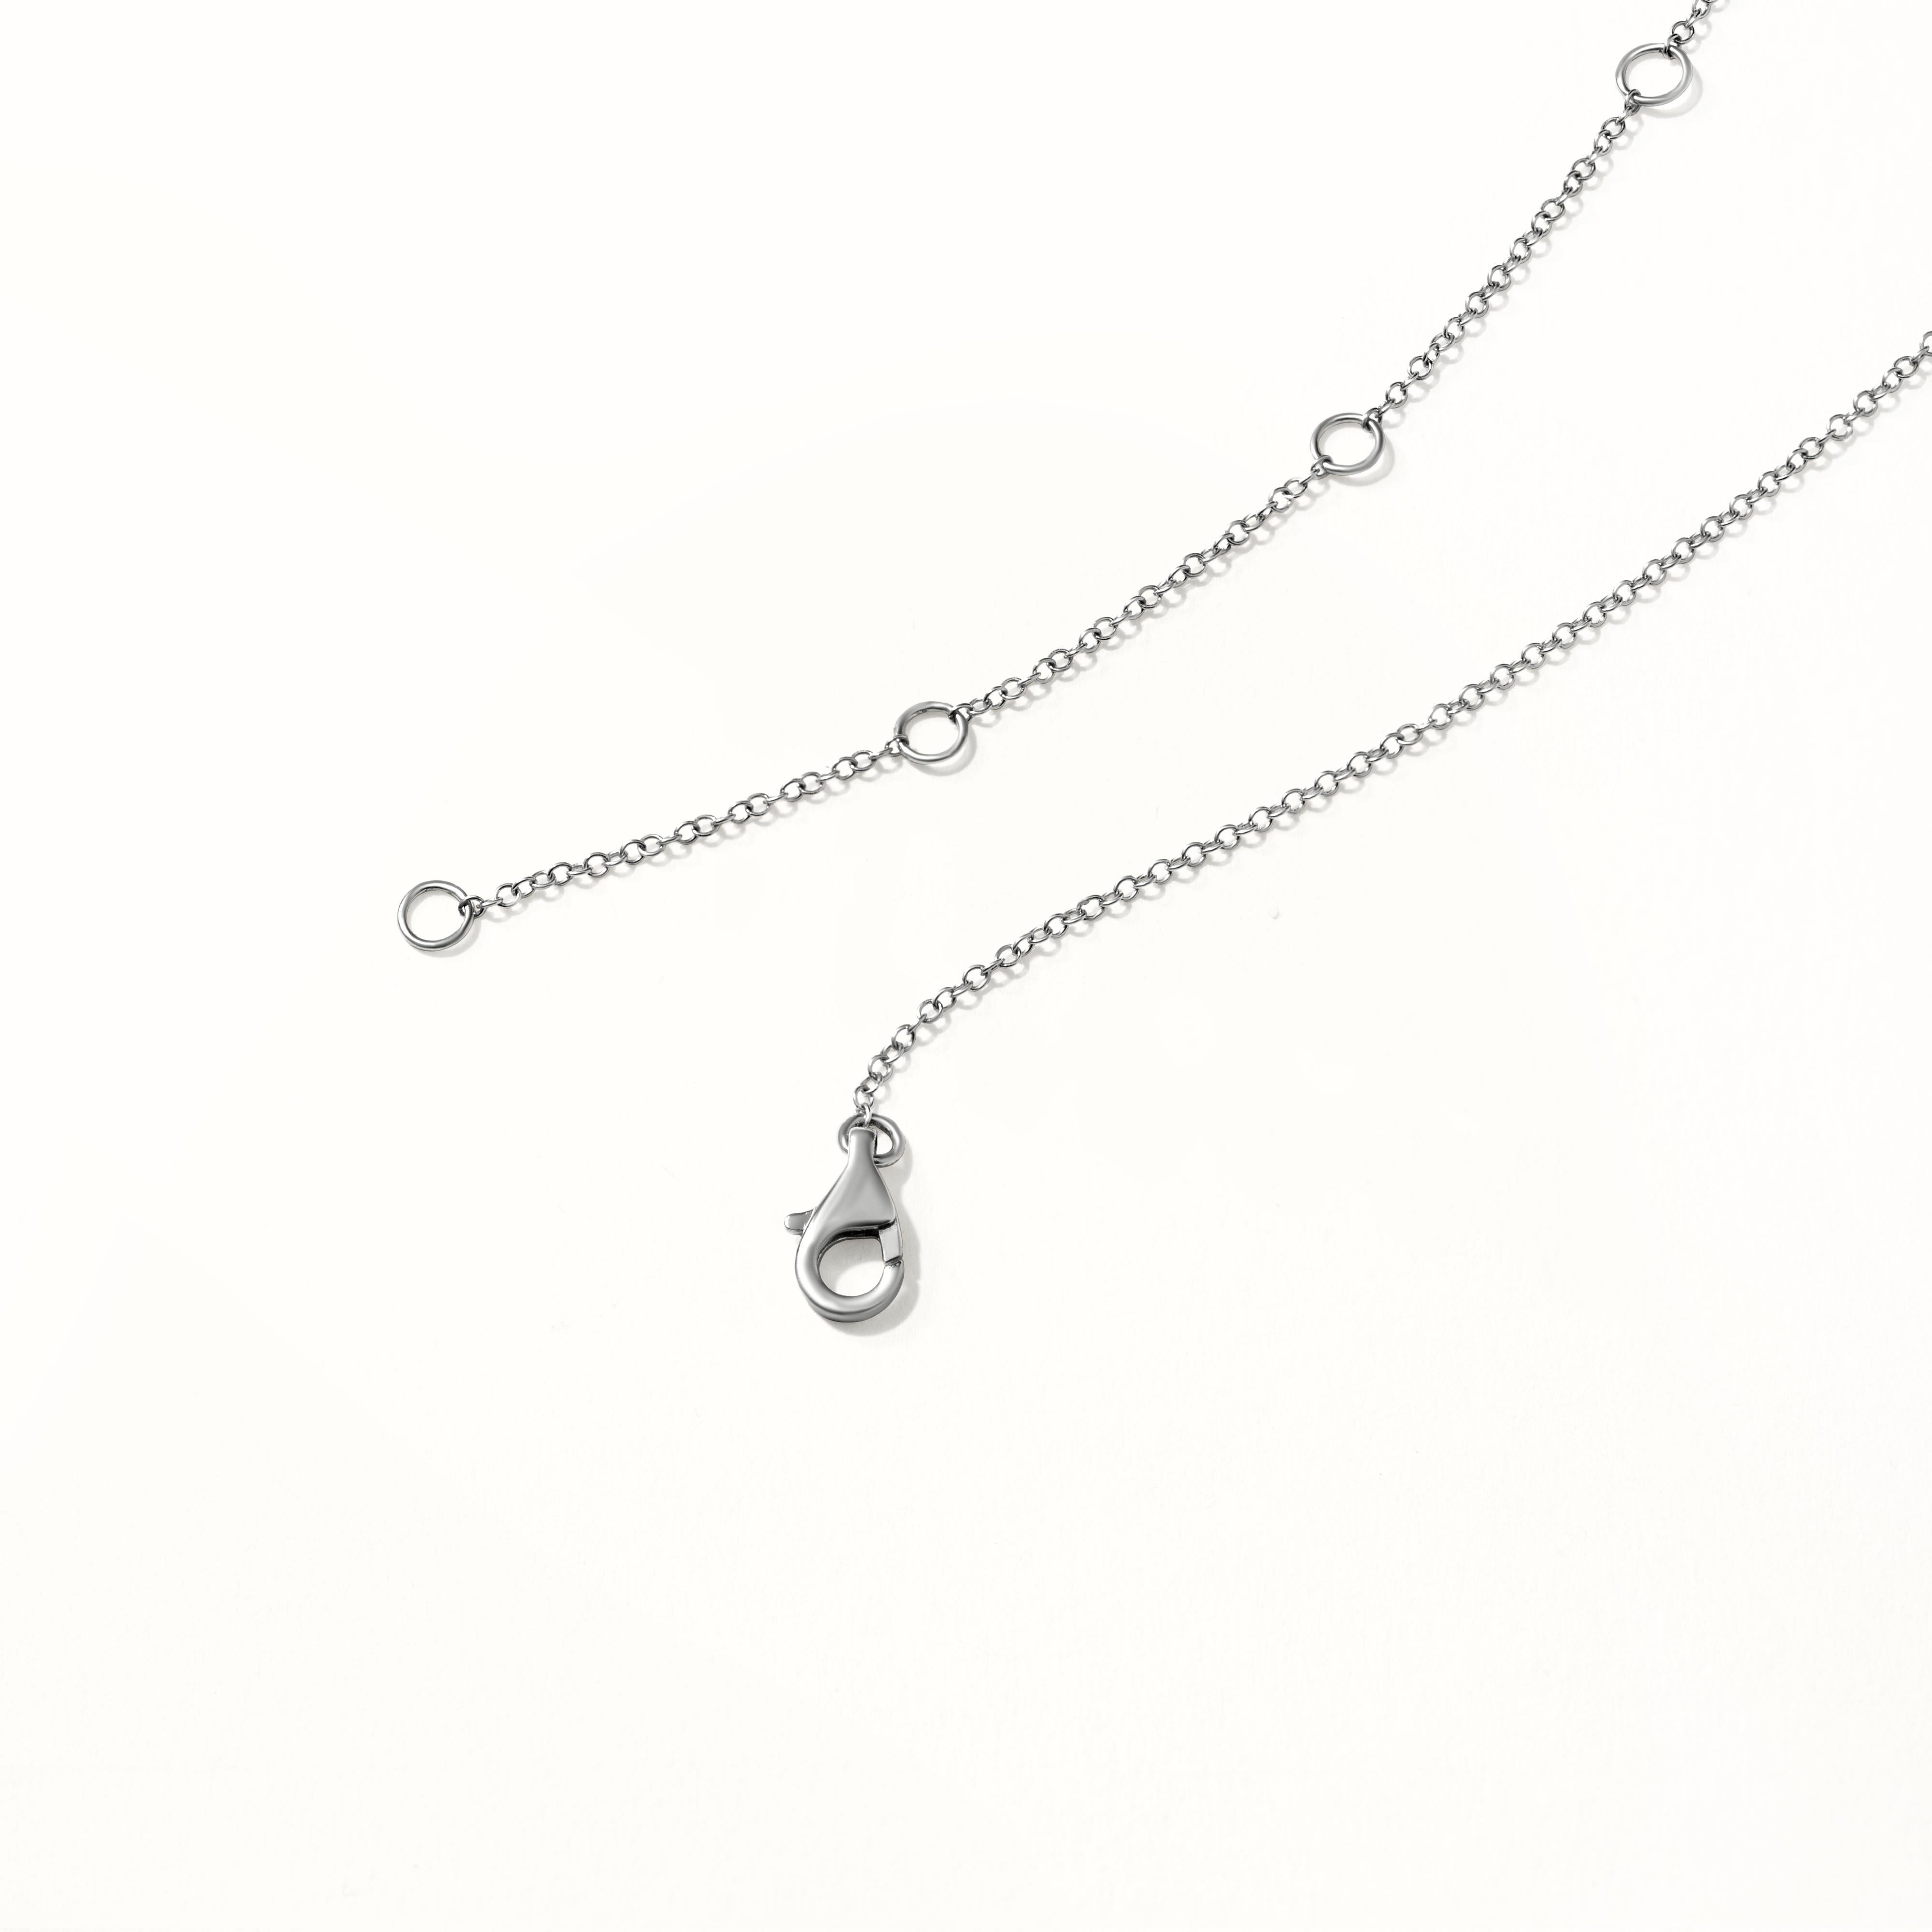 Round Cut Luxle 0.24 Carat Diamond Pendant Necklace in 18k White Gold